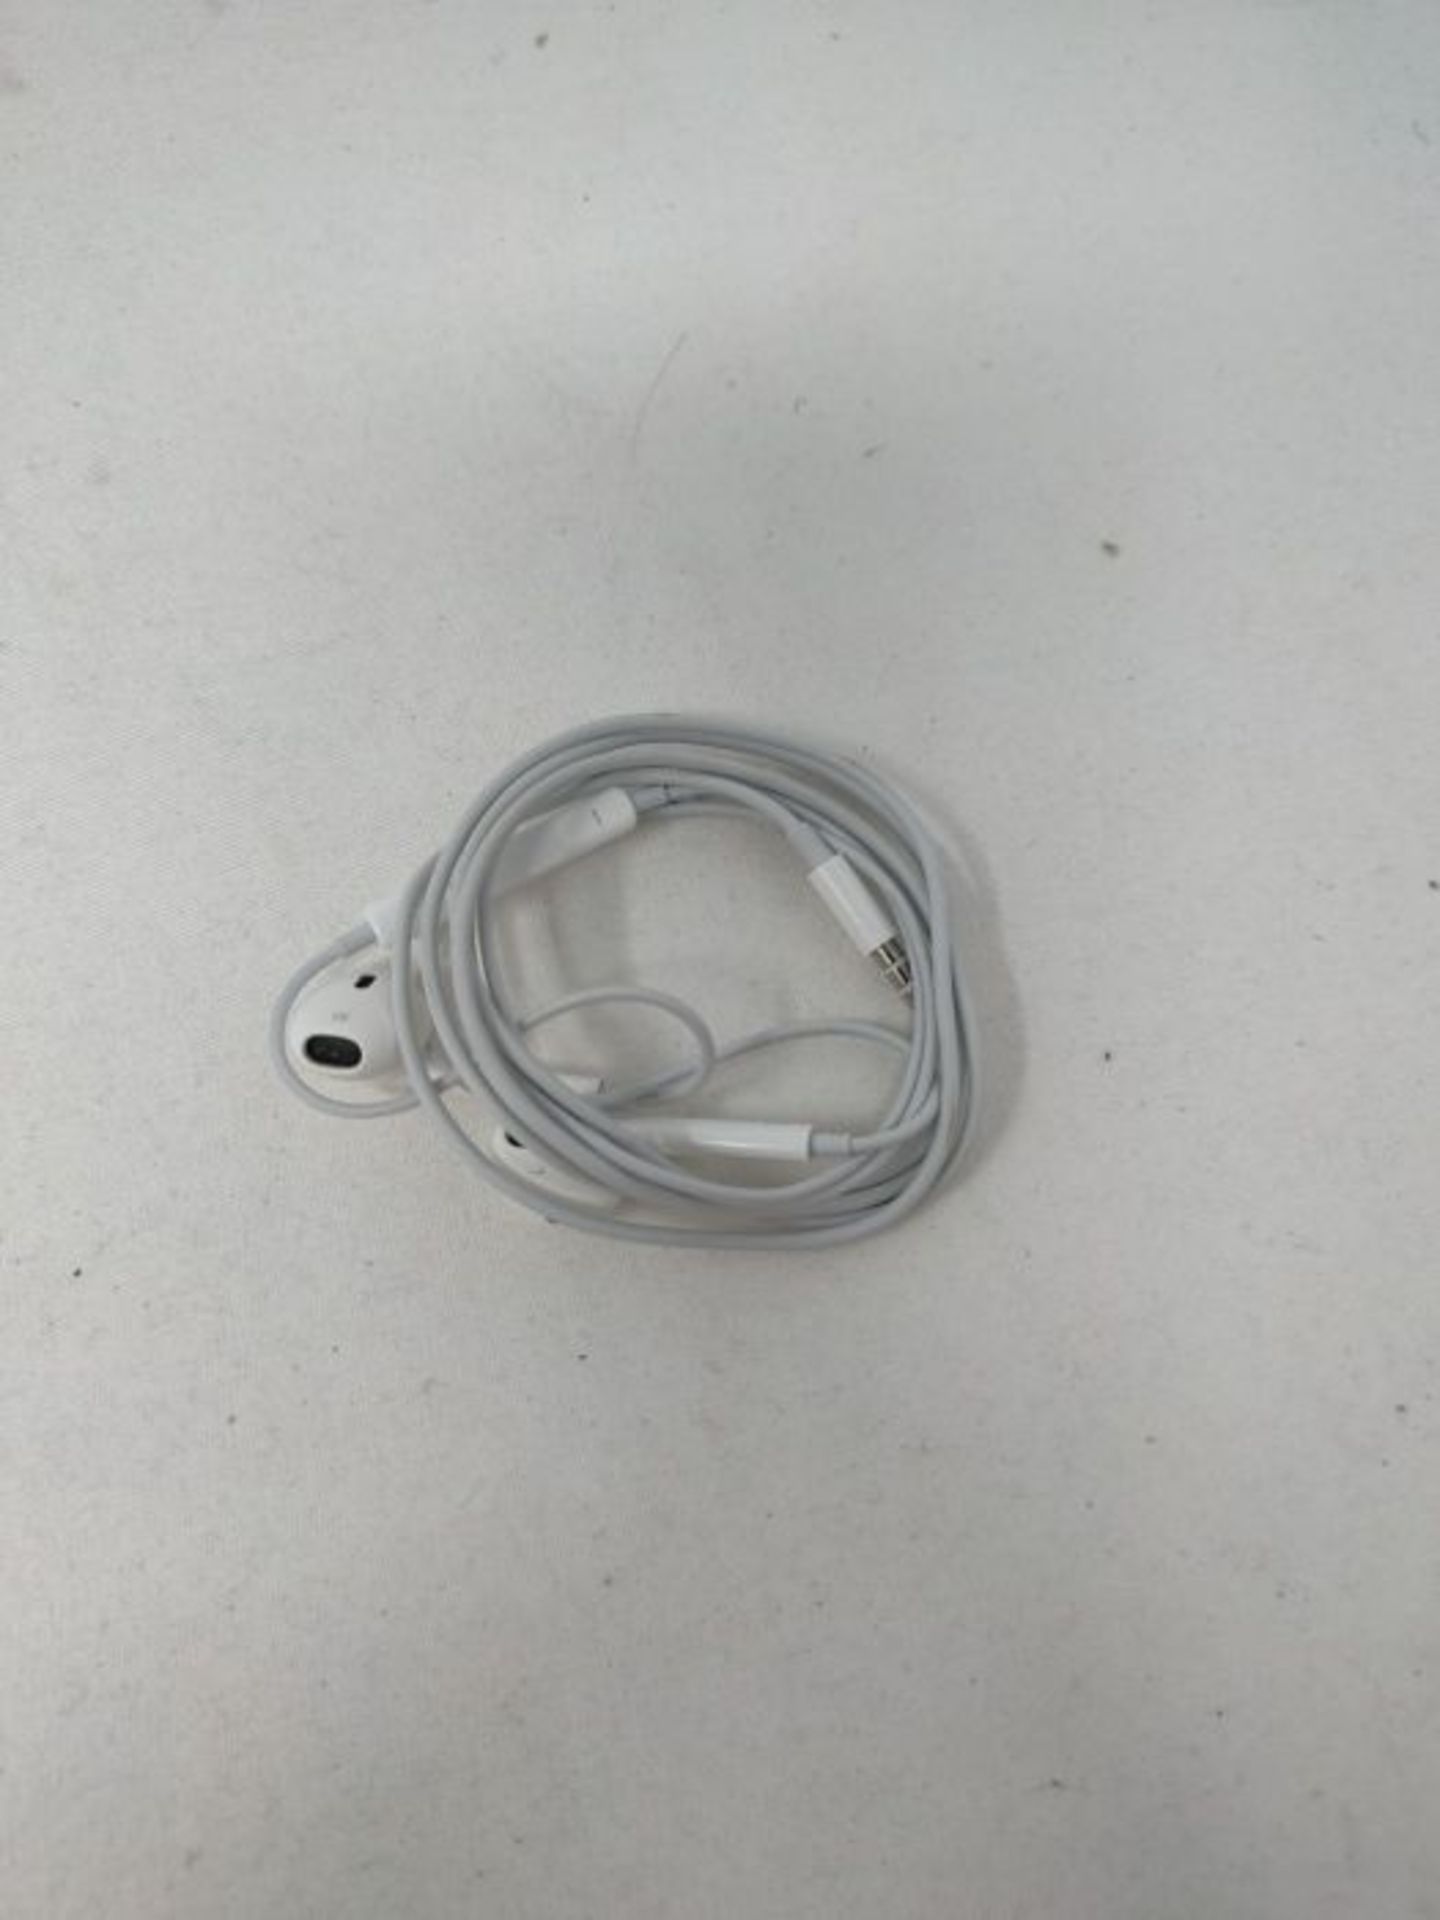 Apple EarPods with 3.5mm Headphone Plug - White - Image 2 of 2